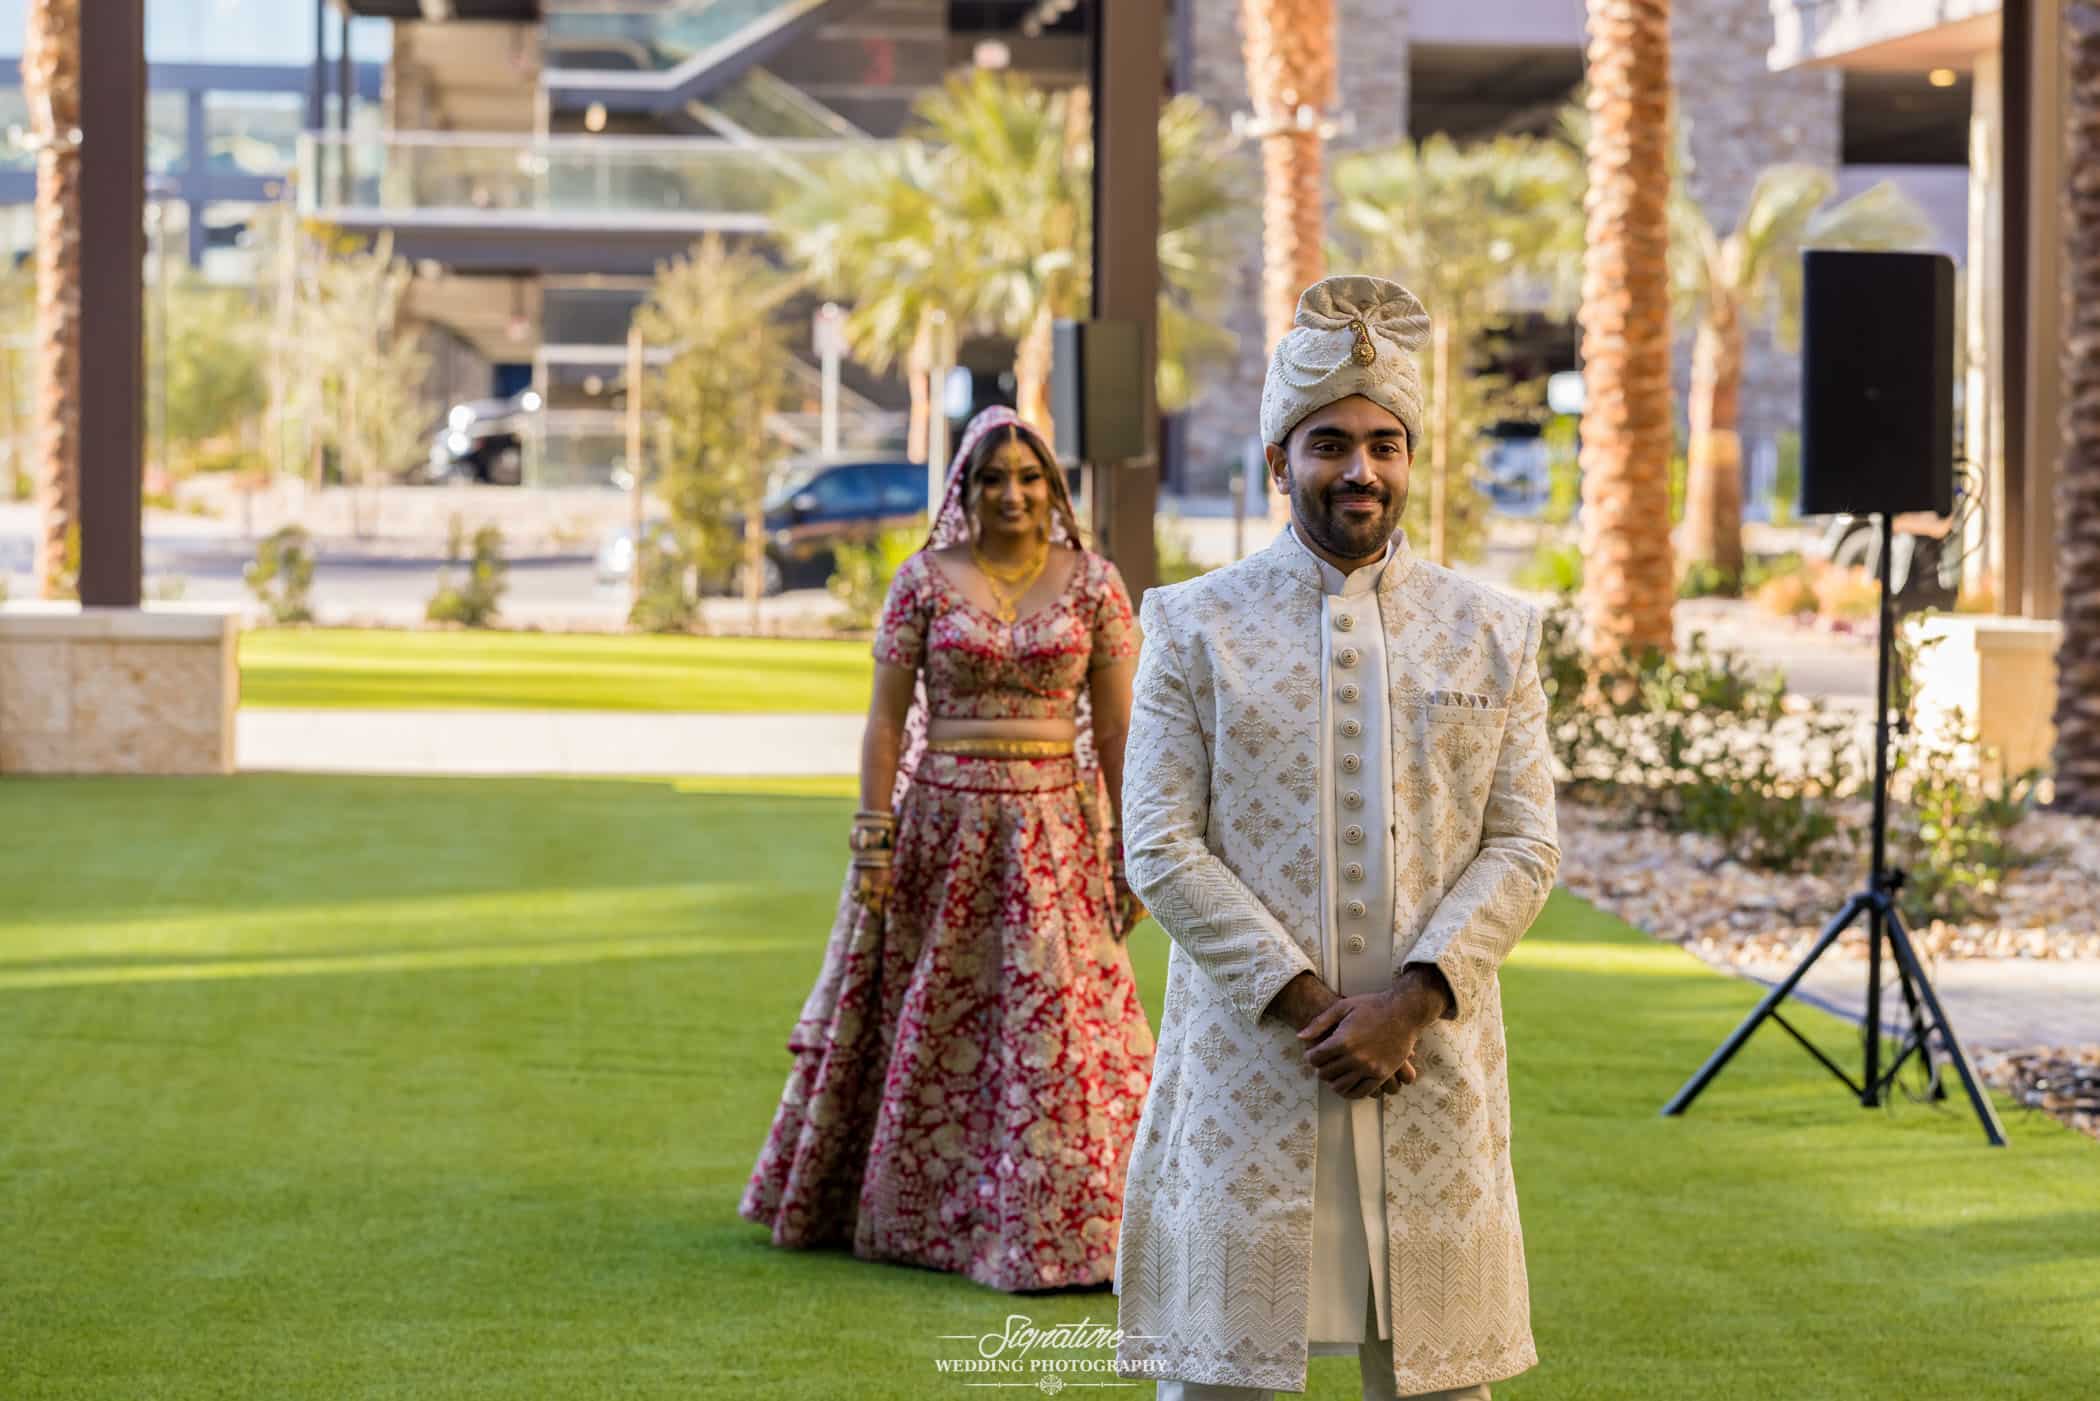 Bride behind groom for first look